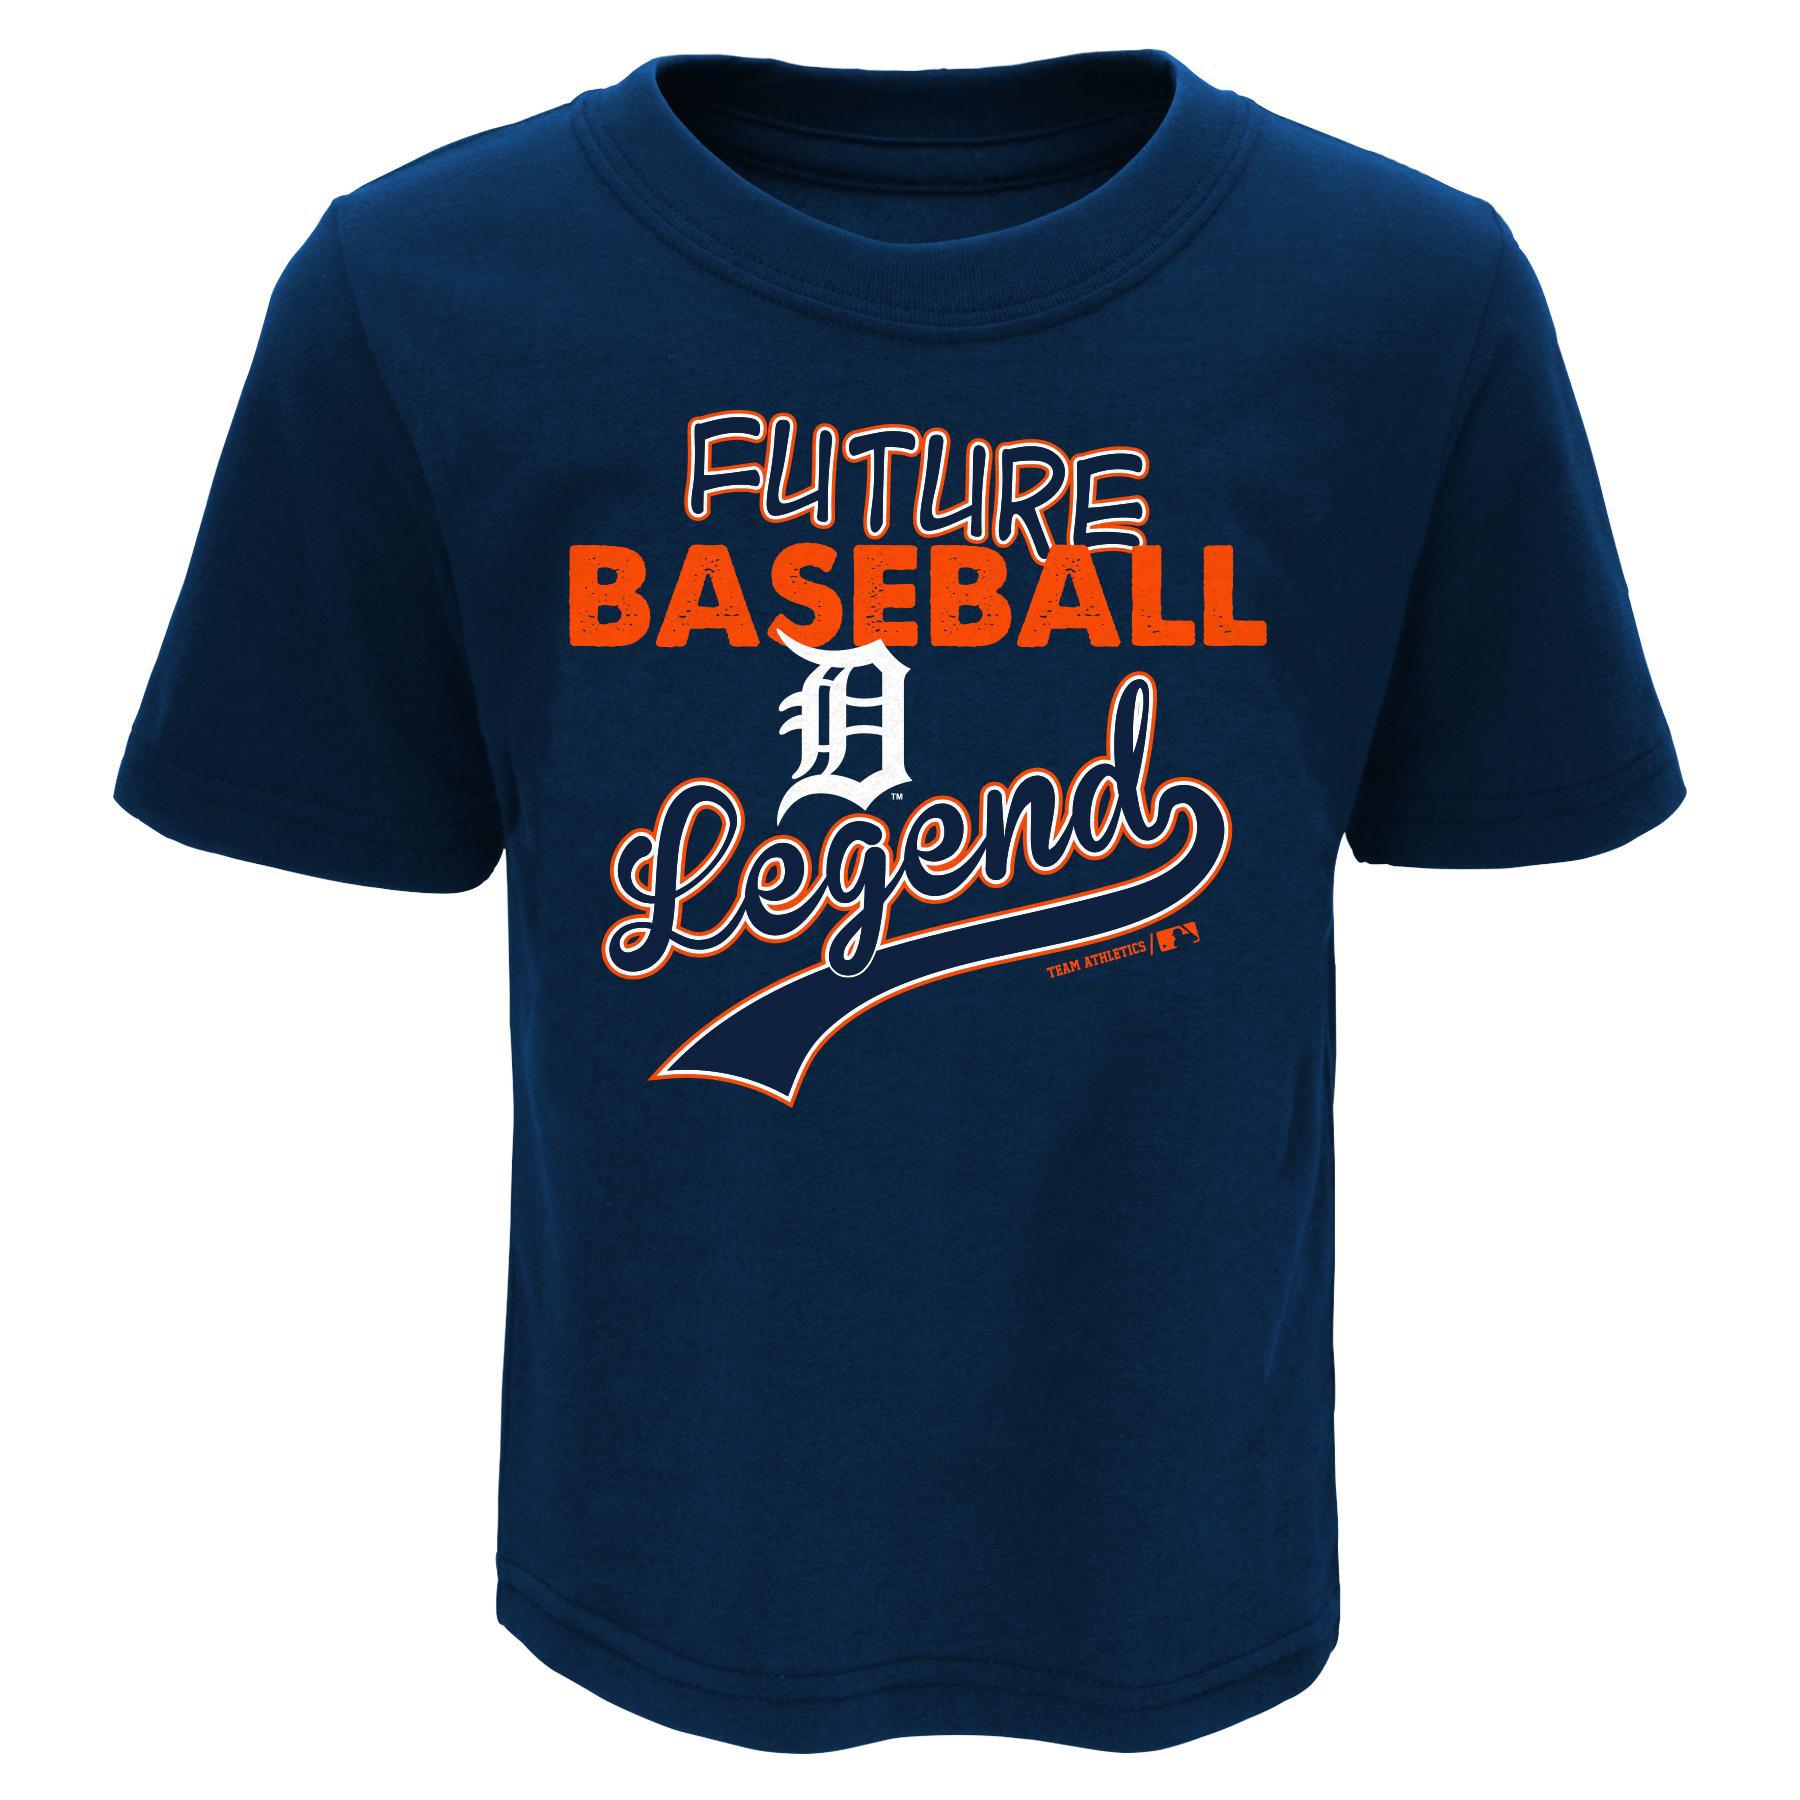 MLB Toddler Boys' Graphic T-Shirt - Detroit Tigers